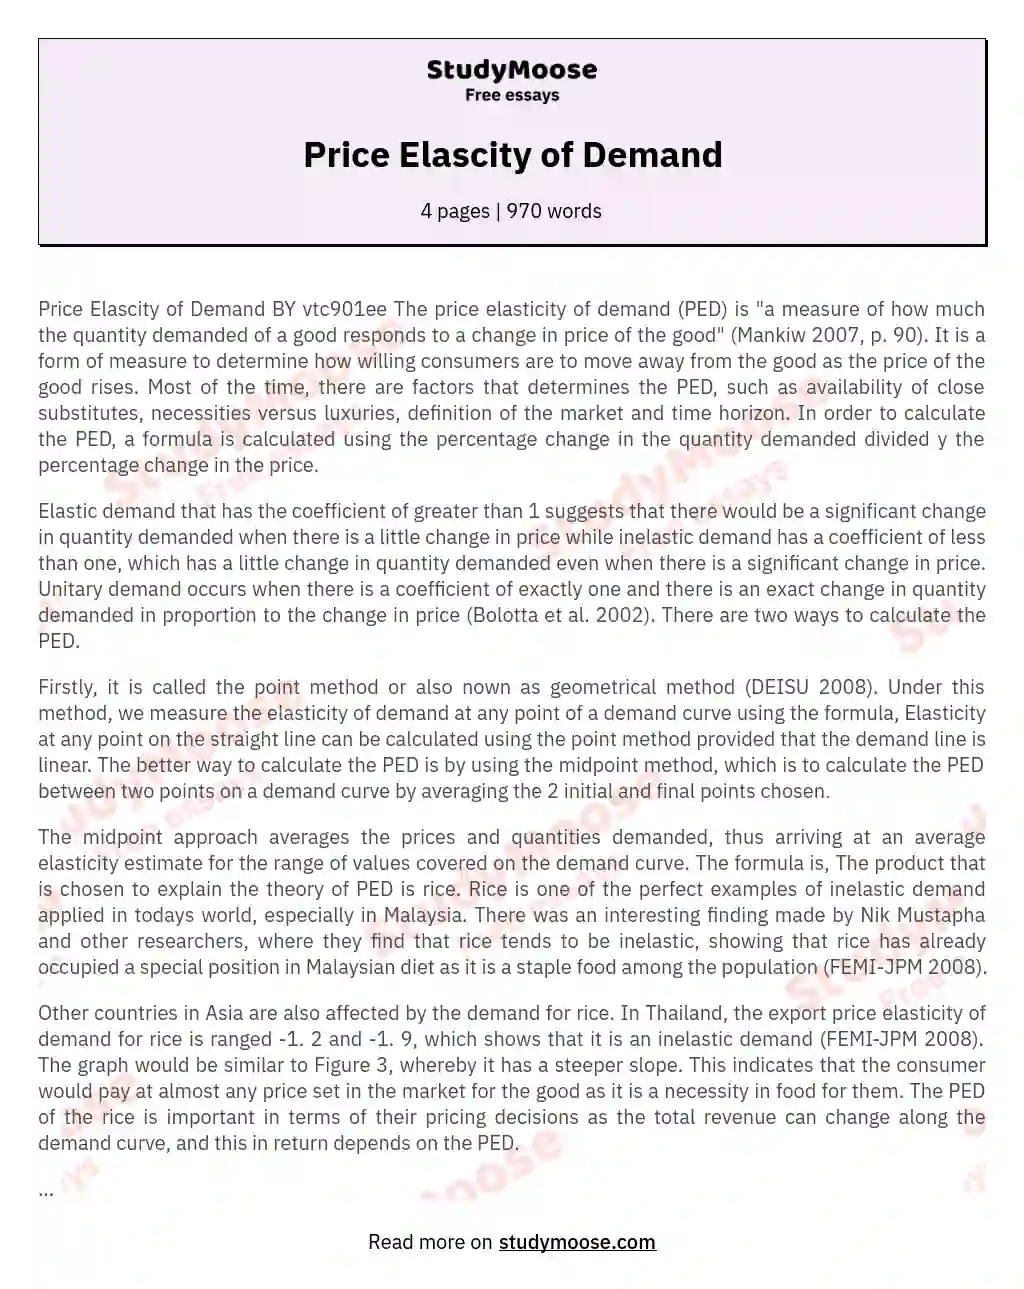 Price Elascity of Demand essay